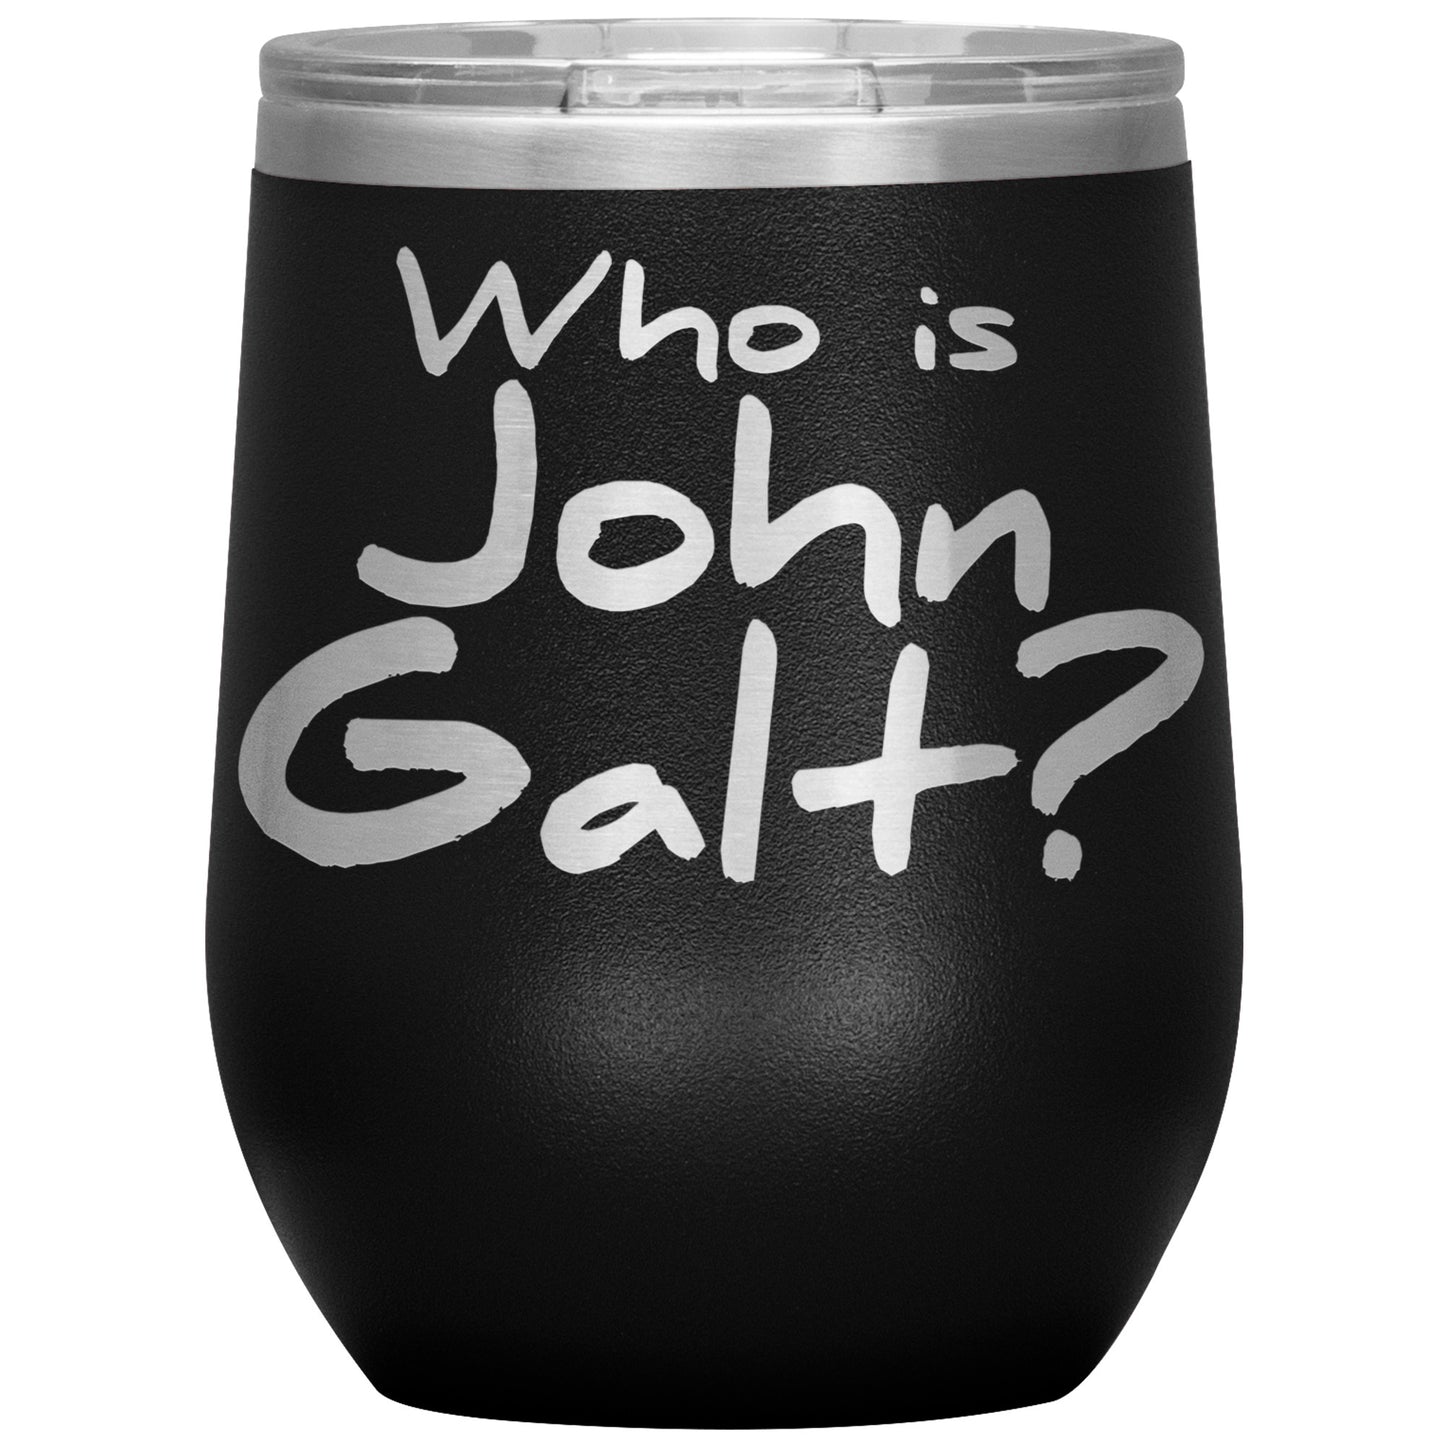 WHO IS JOHN GALT? INSULATED WINE TUMBLER